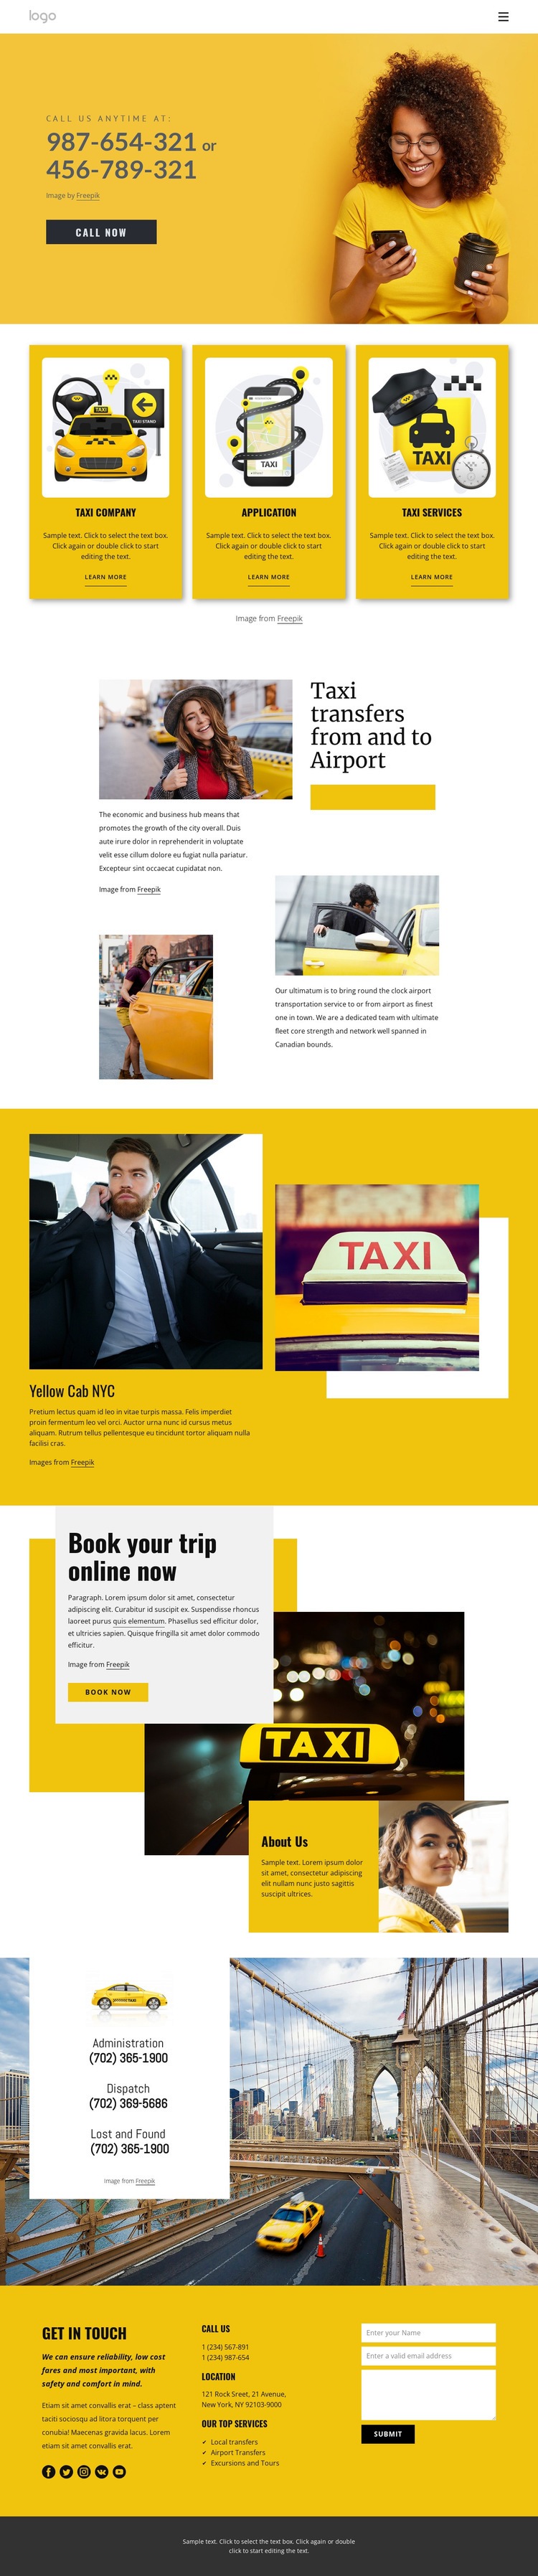 Quality taxi service Wix Template Alternative